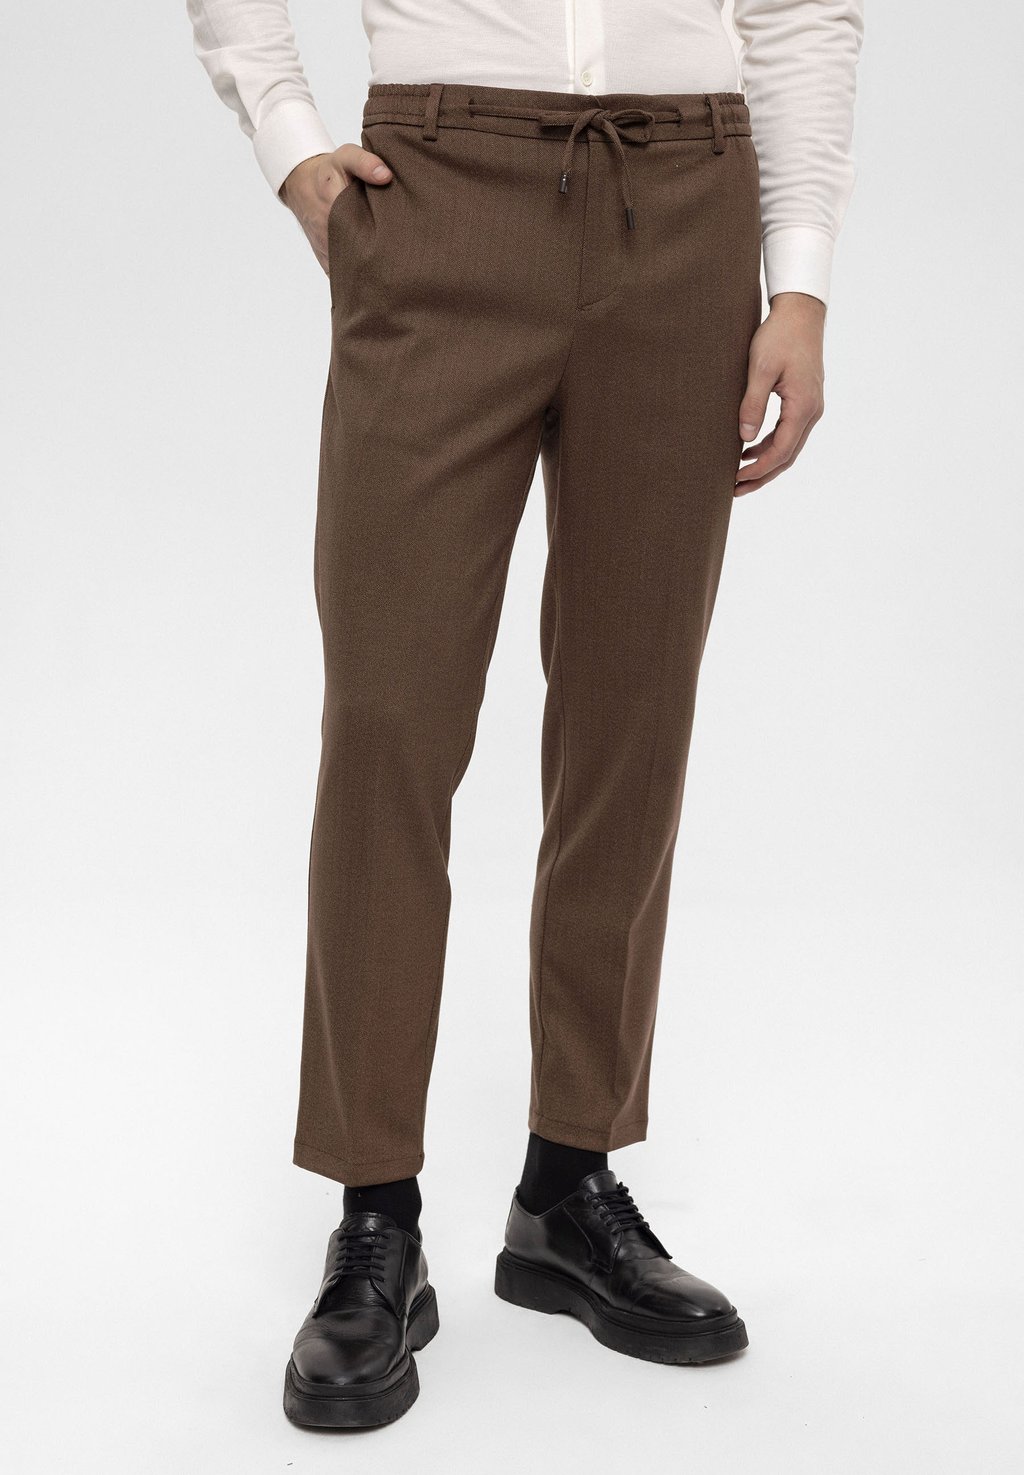 Брюки Elastic Waist Belt Detailed Antioch, коричневый брюки elastic waist rope detailed adl коричневый